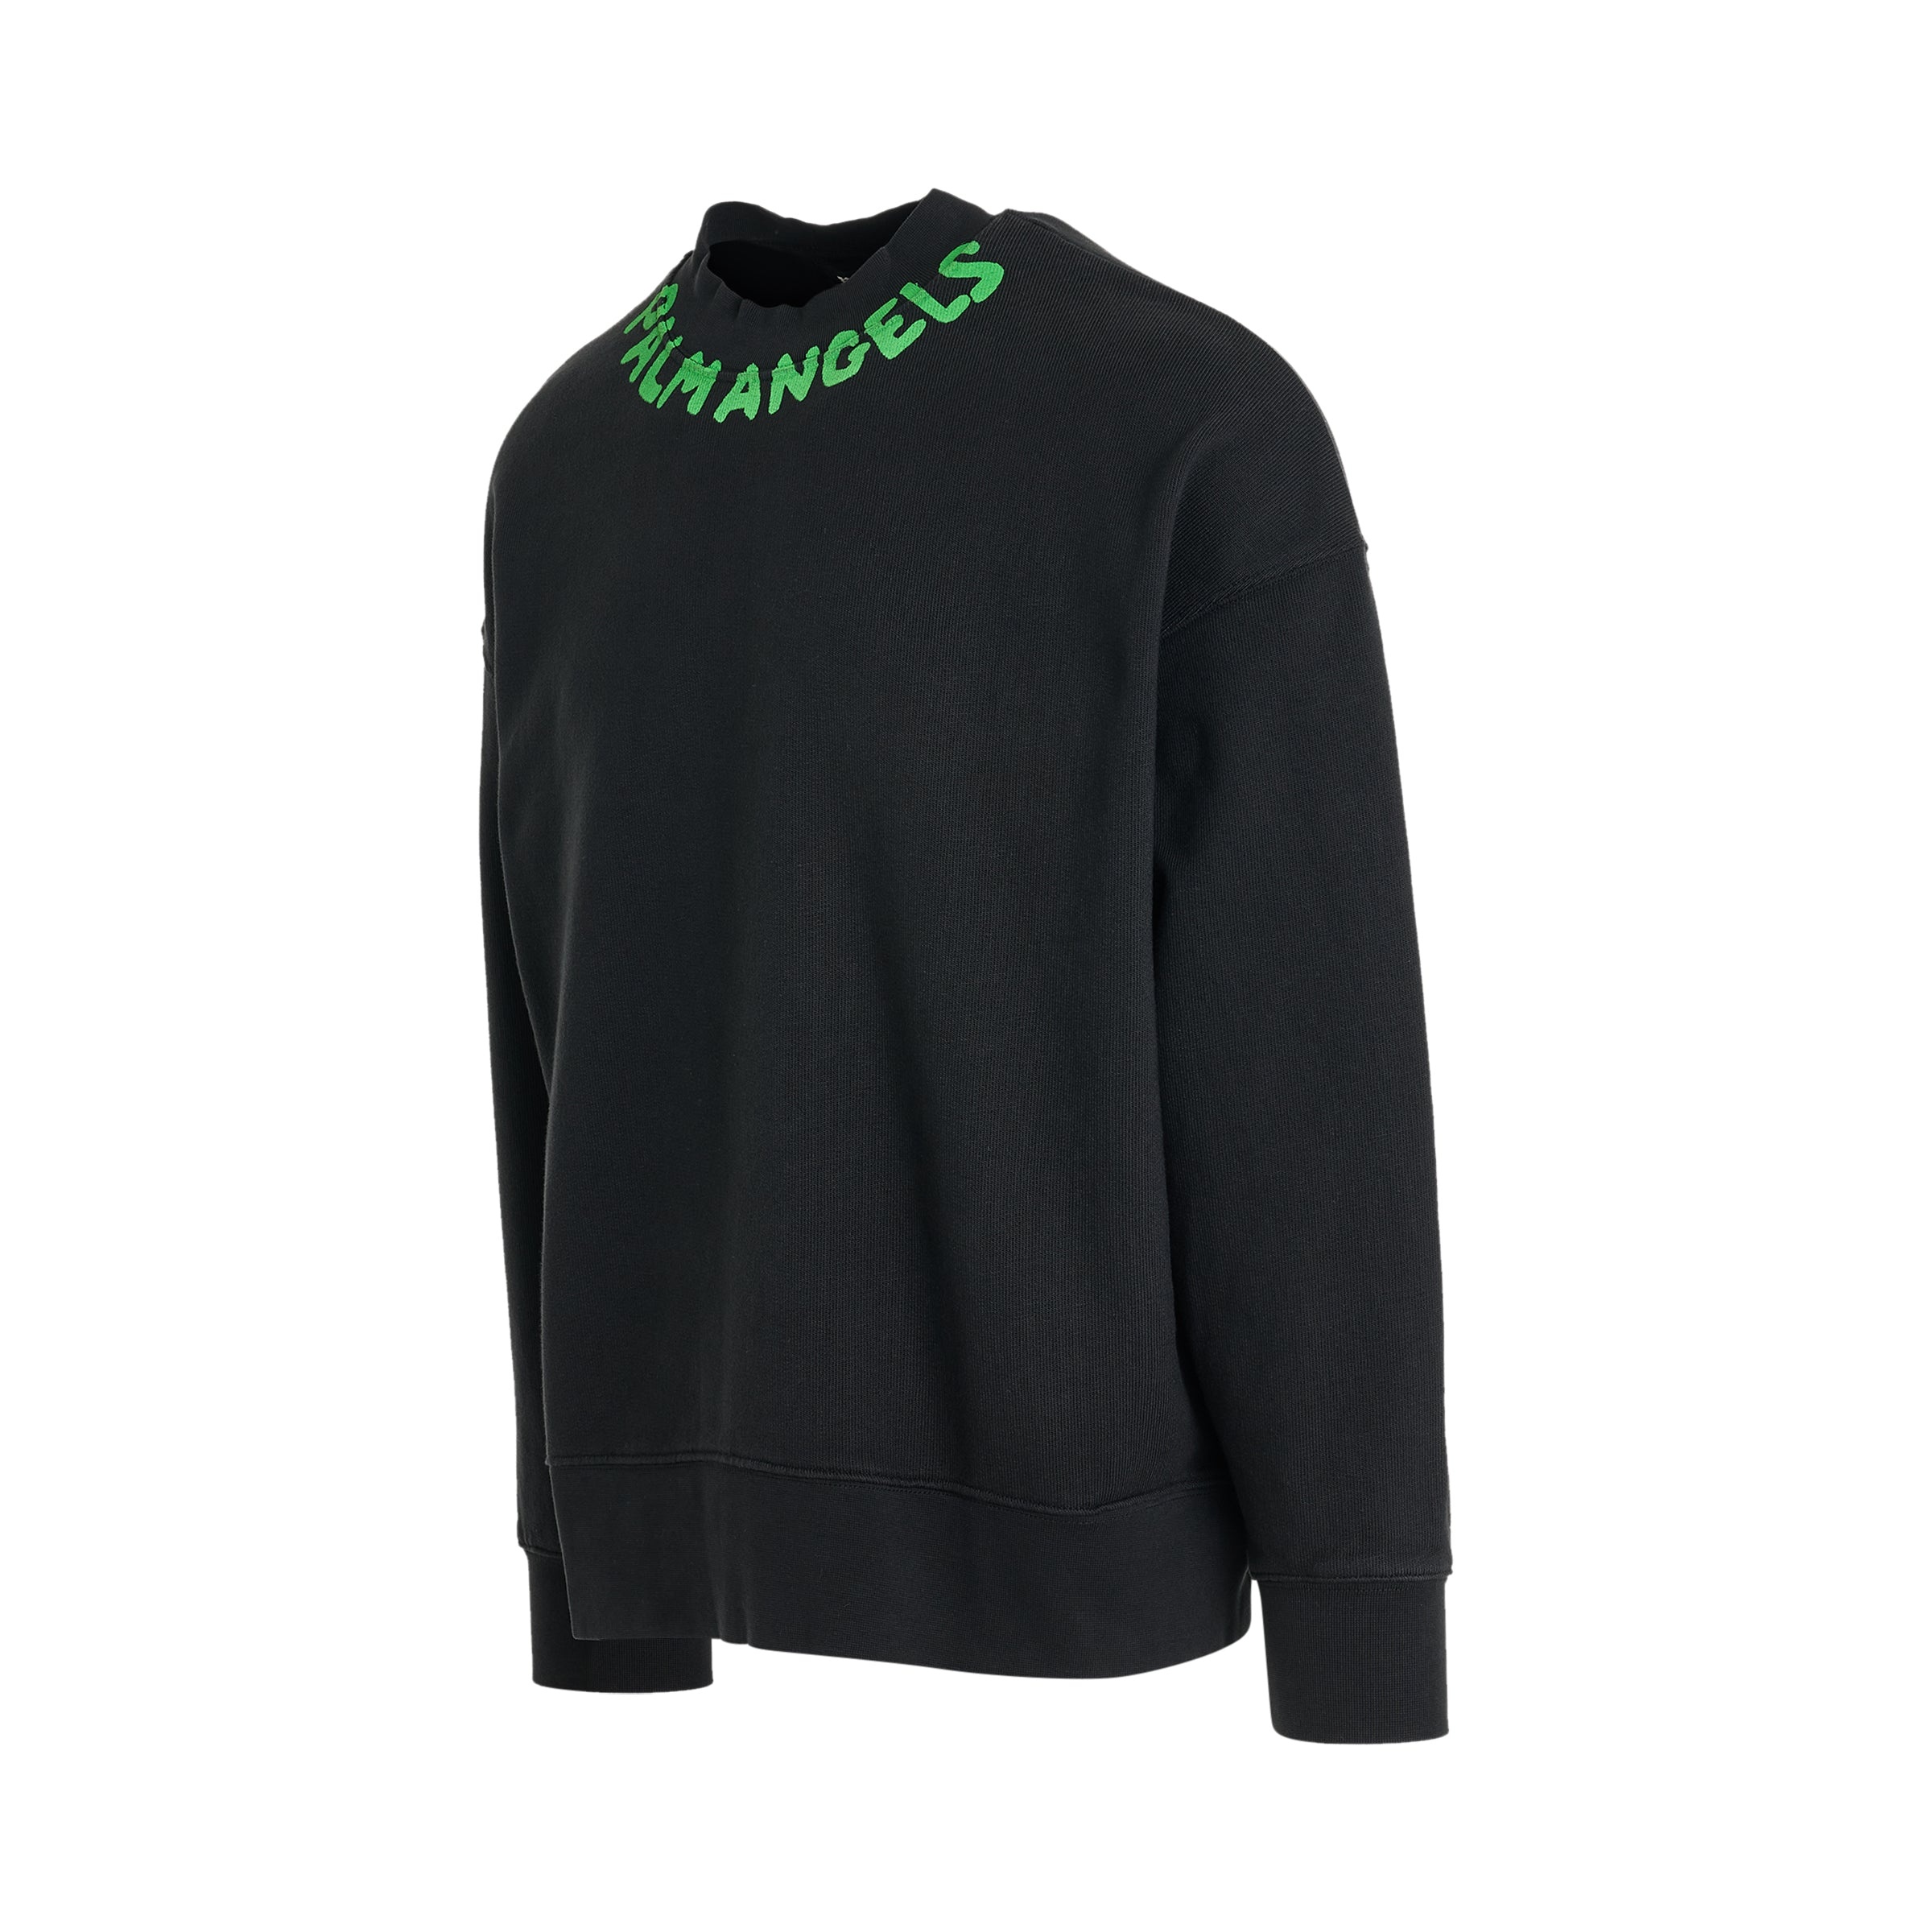 Seasonal Logo Crewneck Sweater in Black/Green - 2